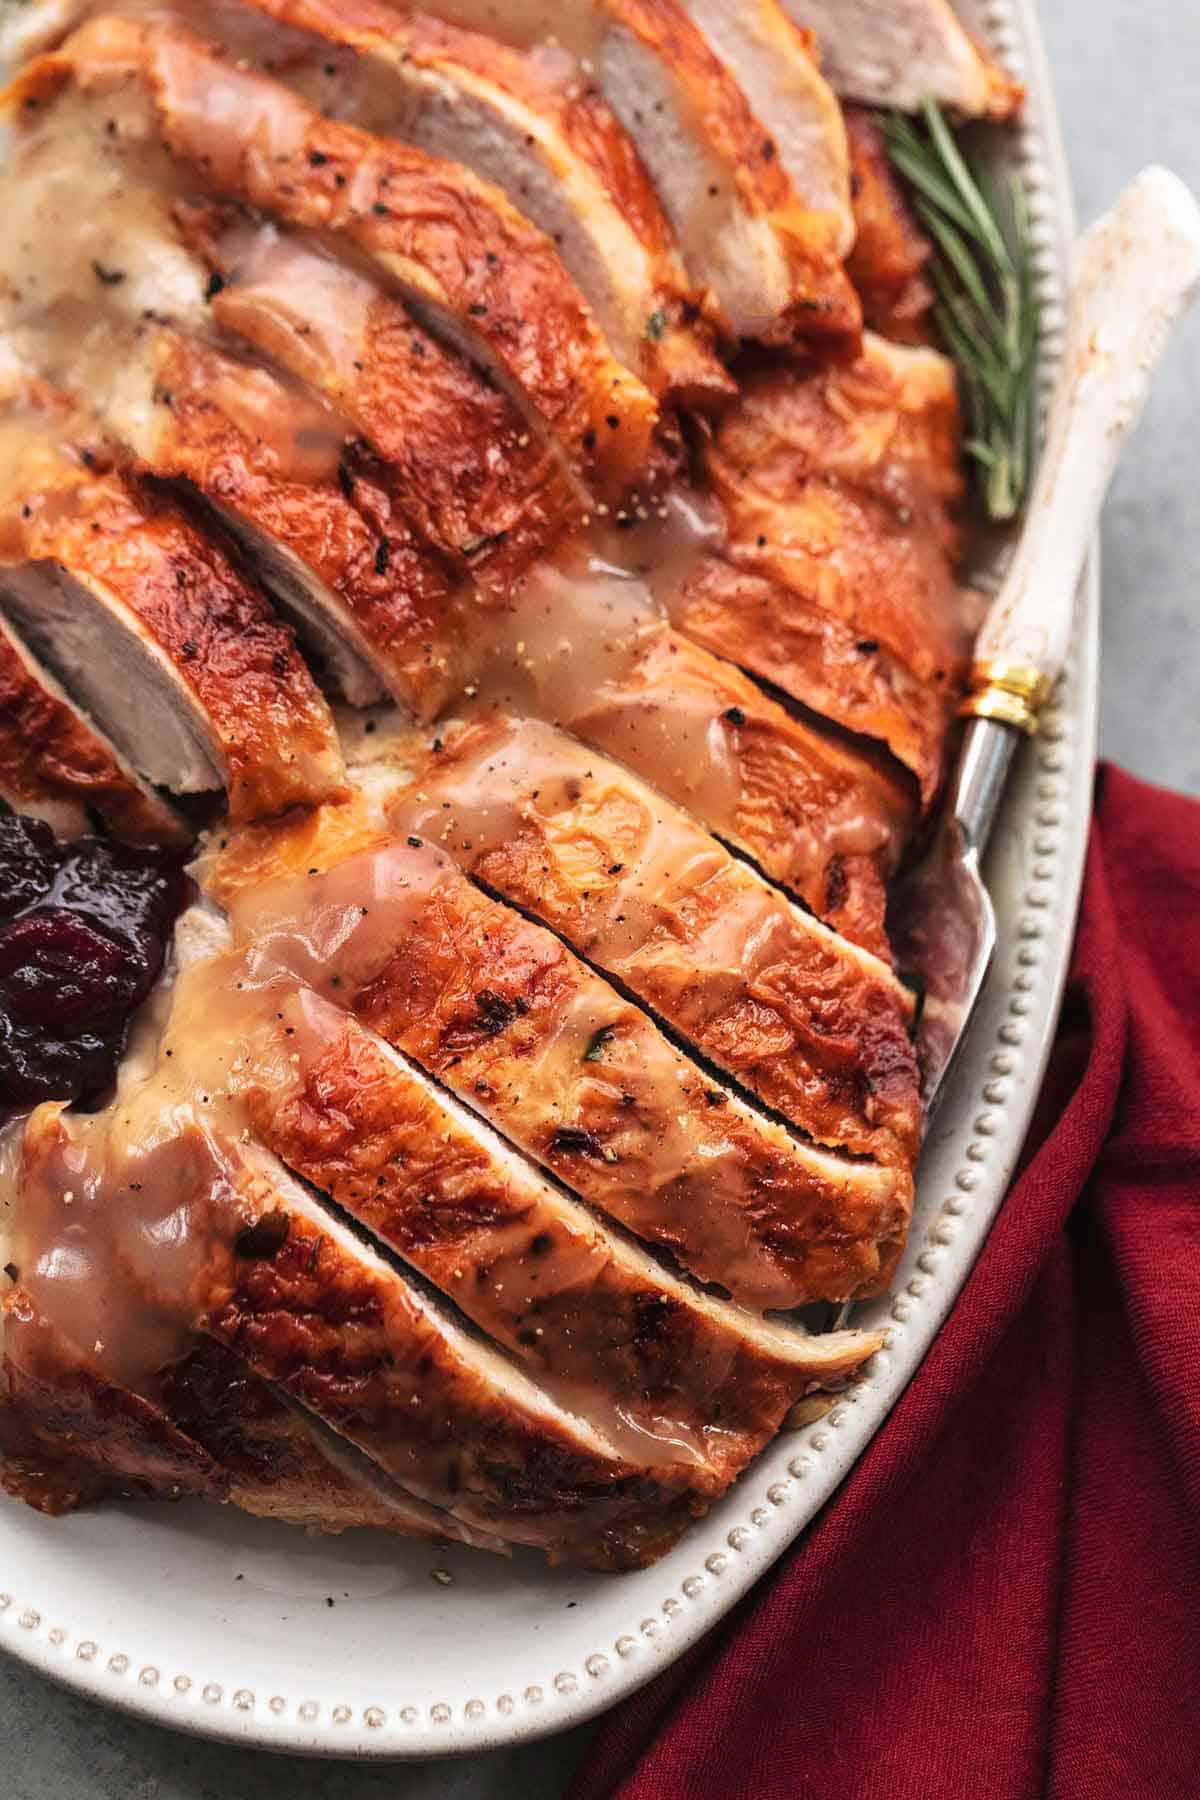 Easy Thanksgiving Turkey Recipe